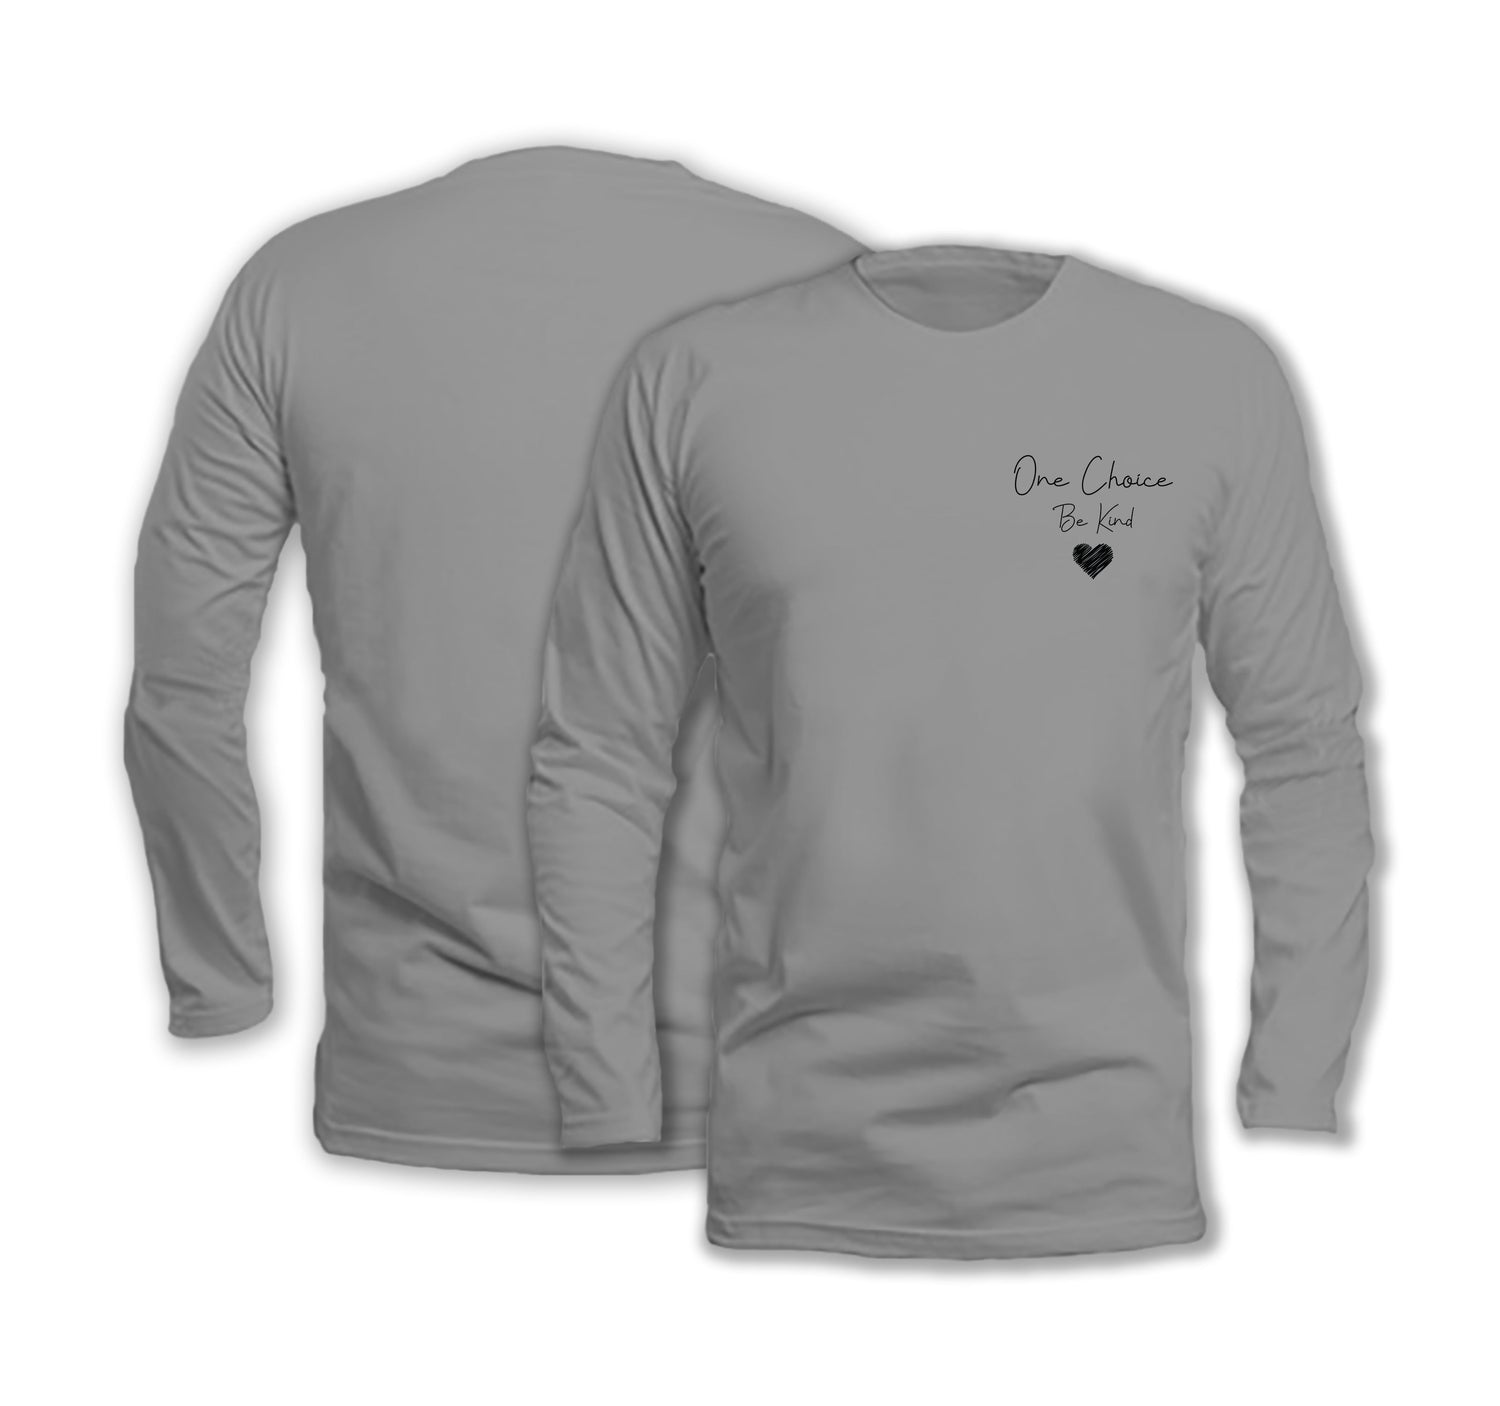 Be Kind - Long Sleeve Organic Cotton T-Shirt - One Choice Apparel